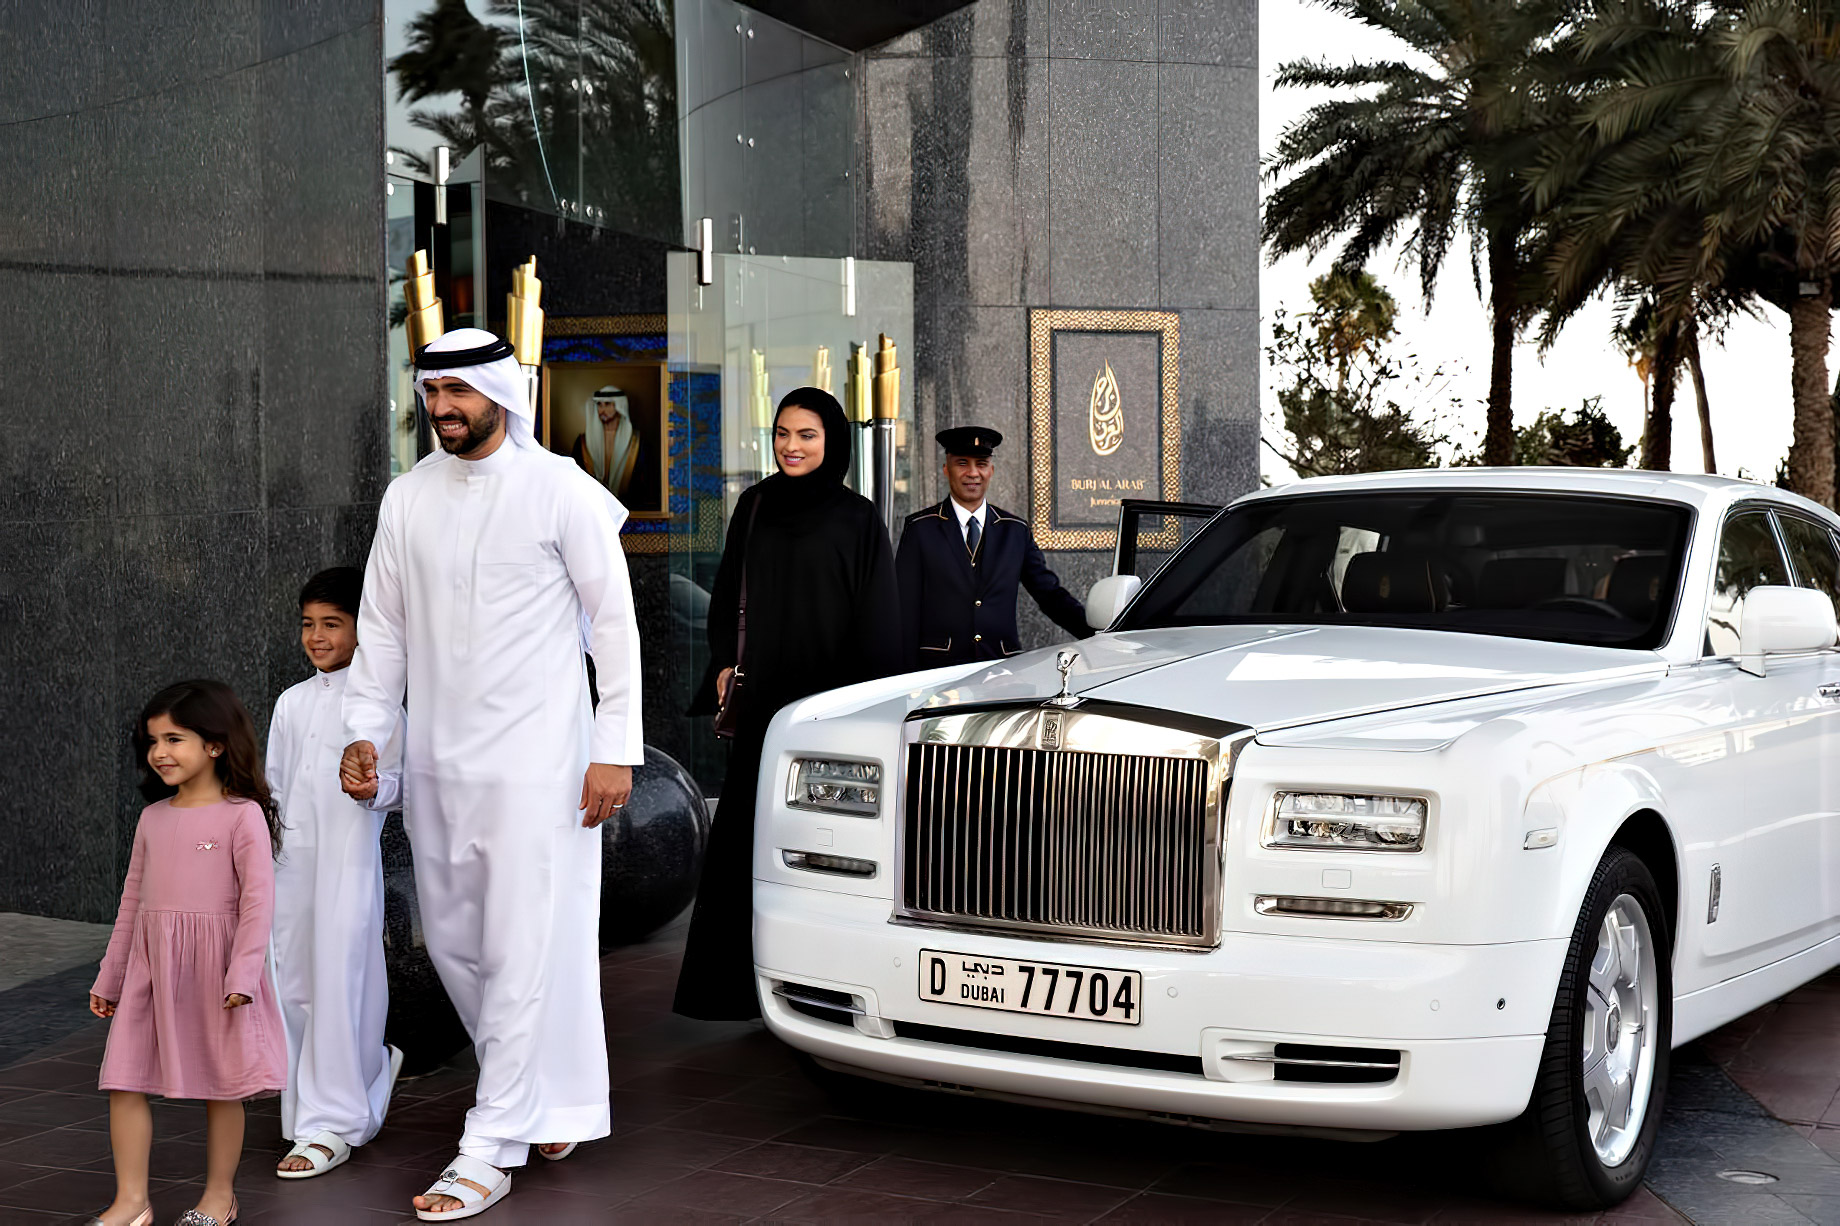 Burj Al Arab Jumeirah Hotel – Dubai, UAE – Rolls Royce Arrival